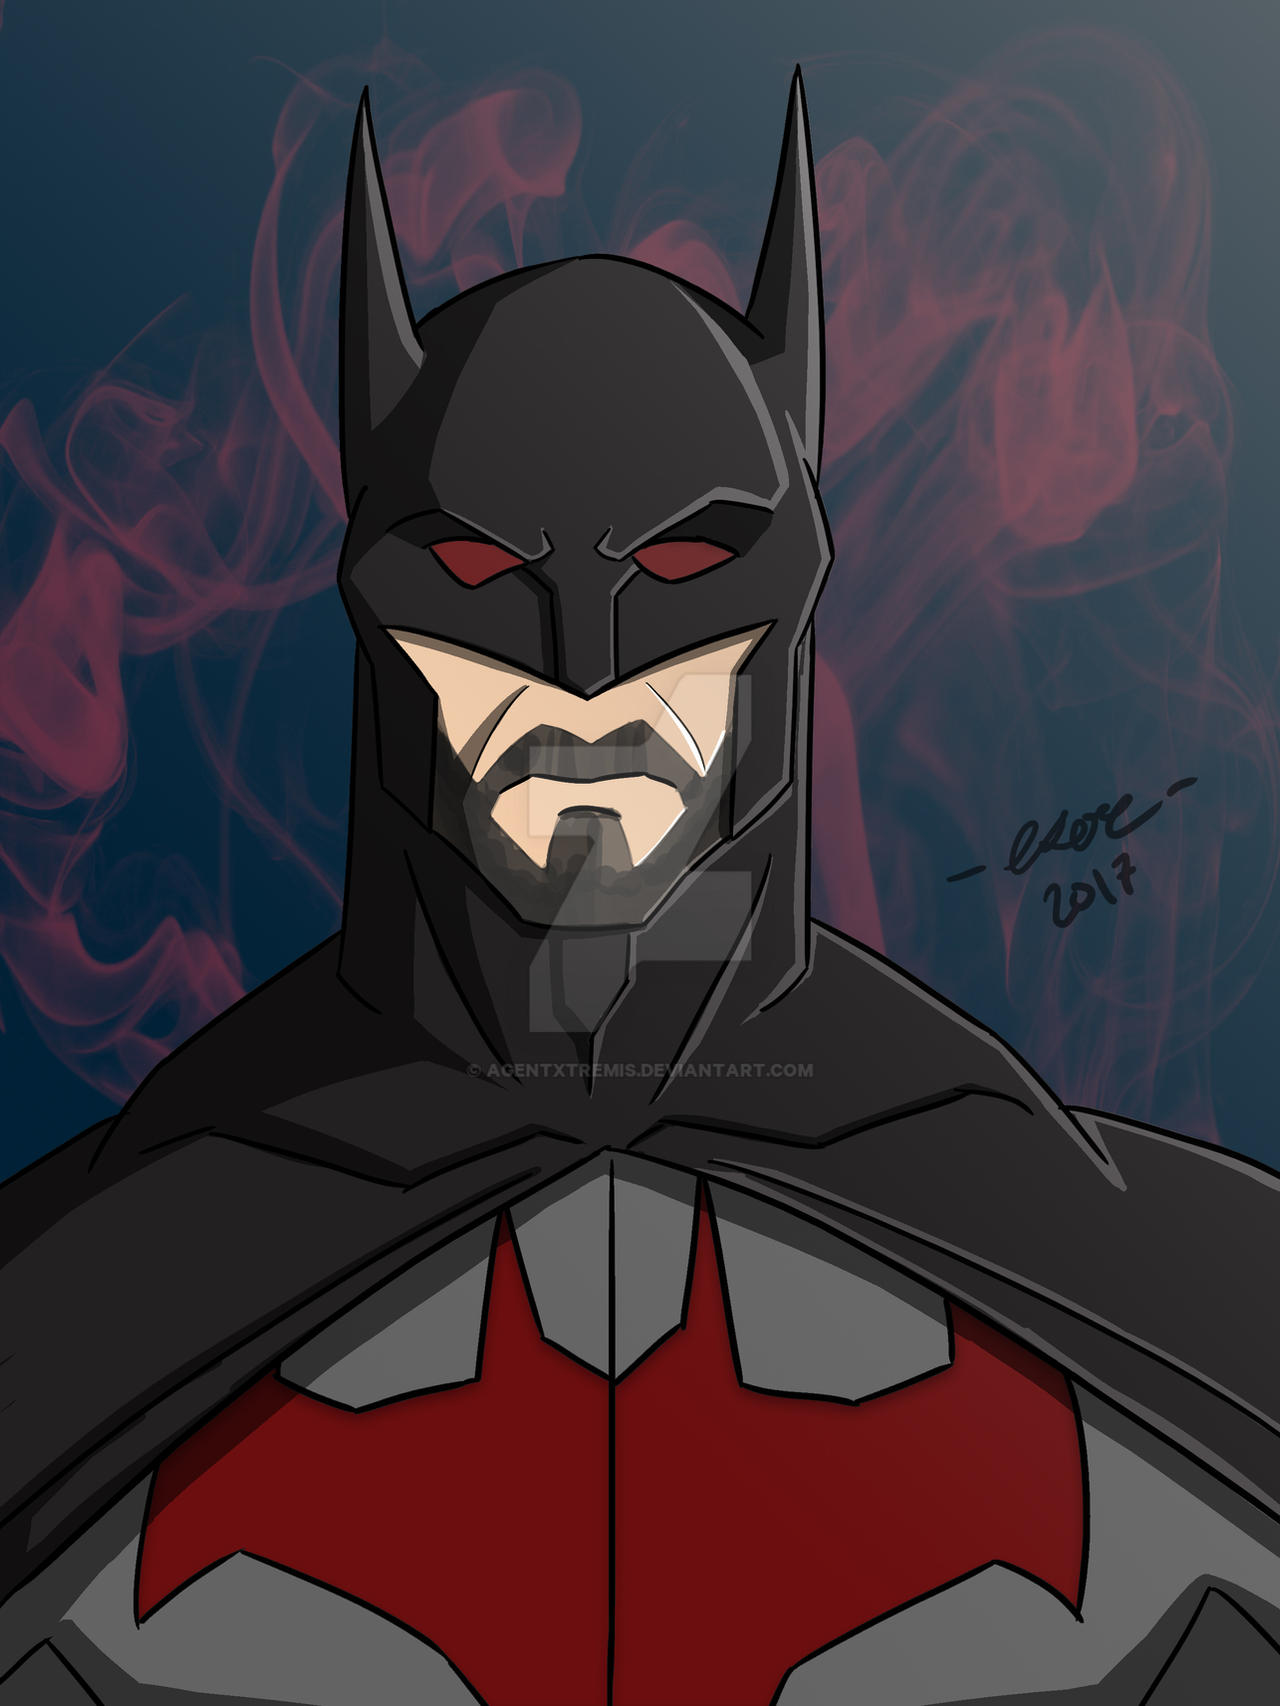 Flashpoint Batman aka Thomas Wayne by AgentXtremis on DeviantArt